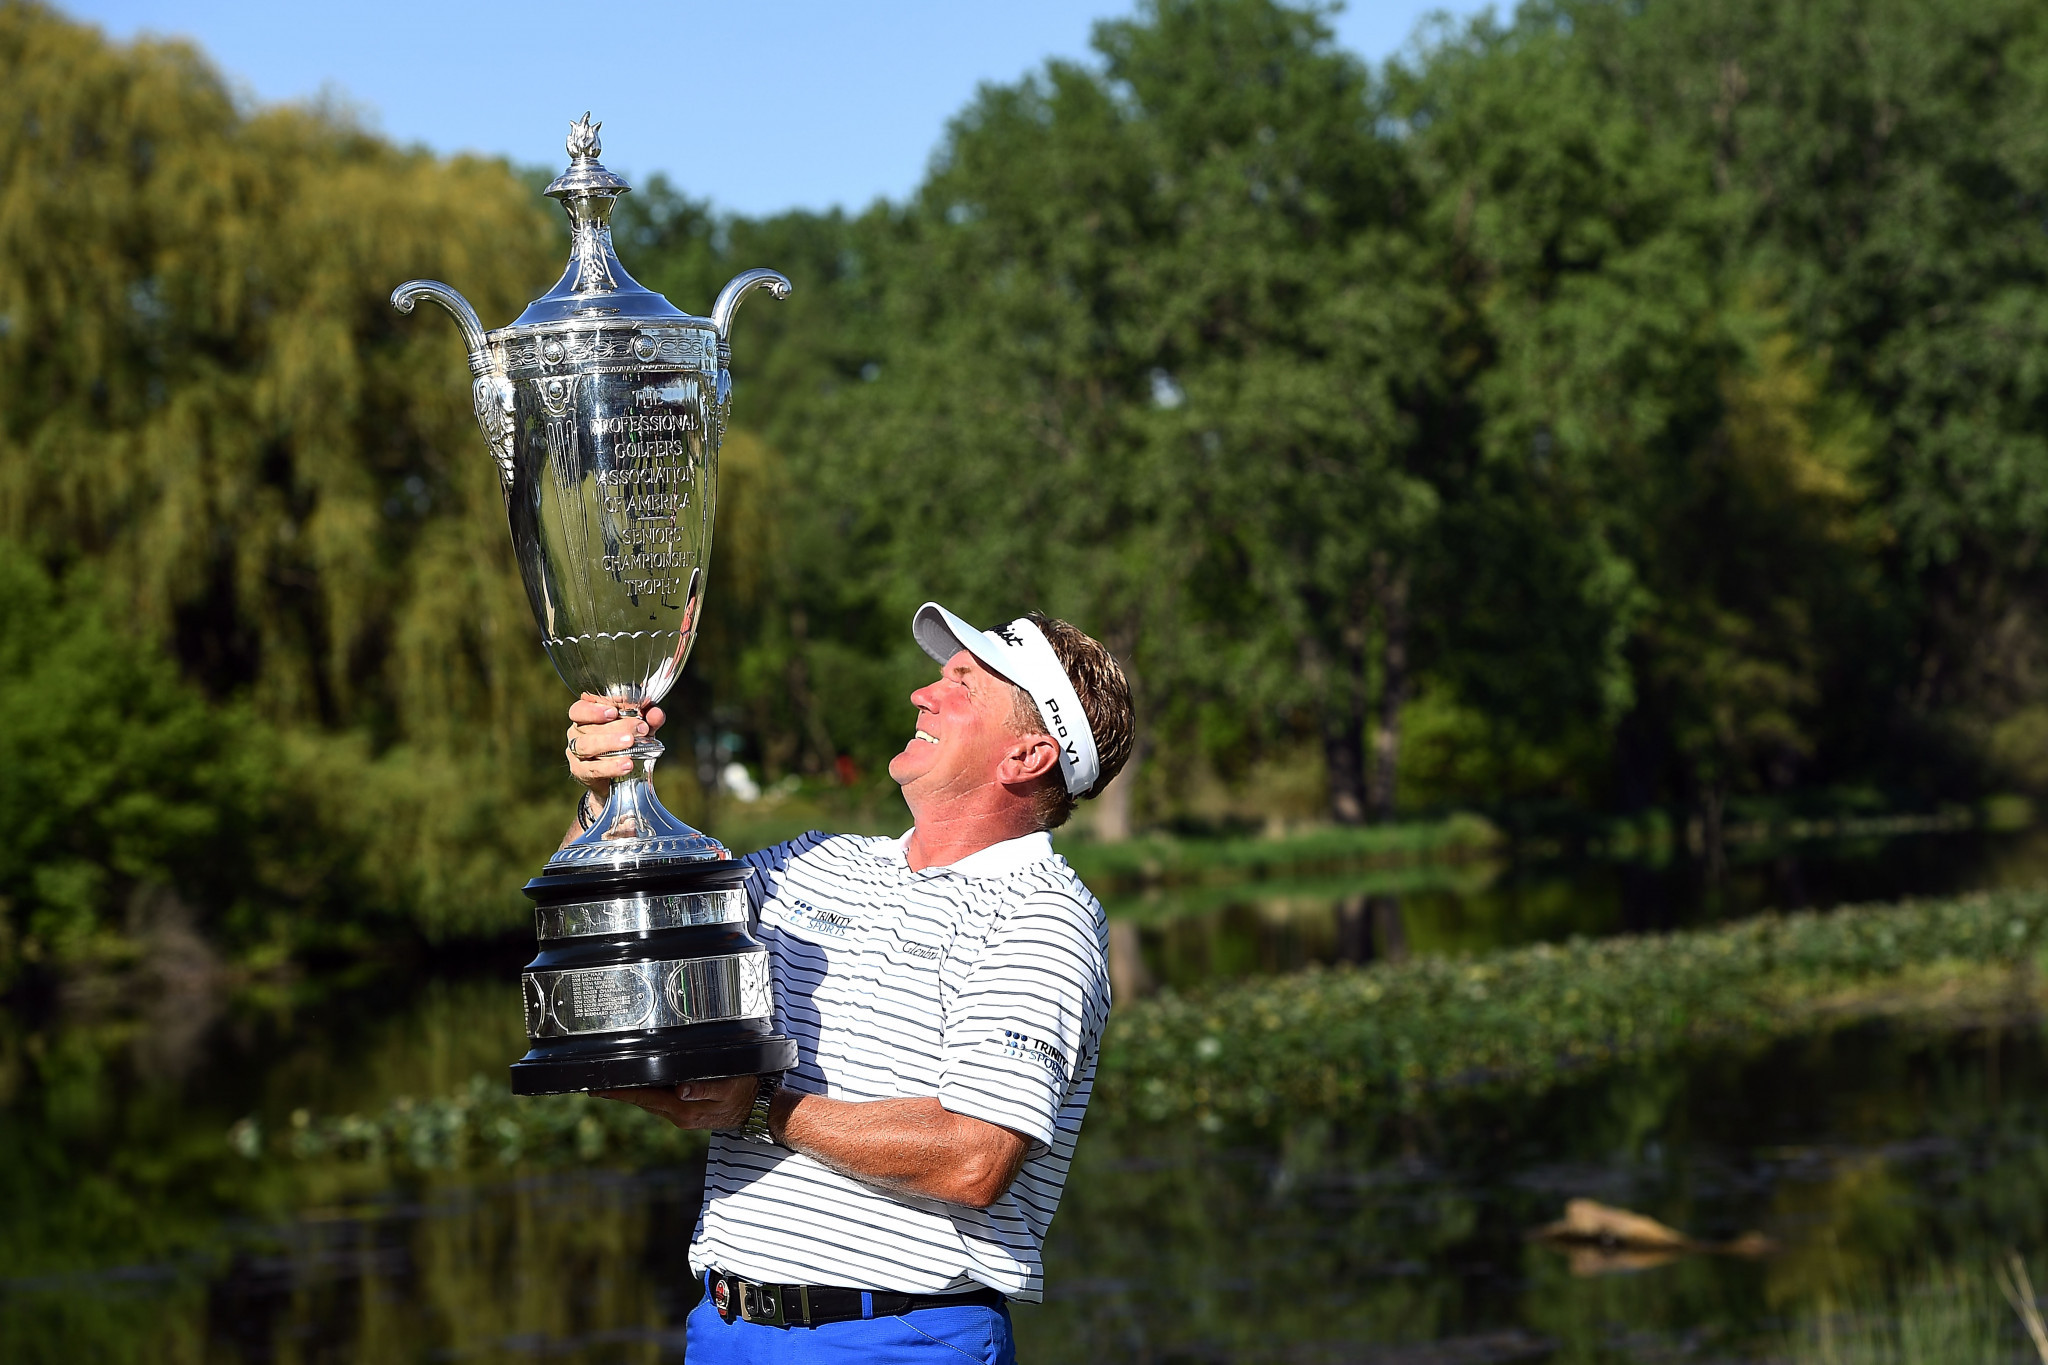 England's Paul Broadhurst won the Senior PGA Championship ©Getty Images